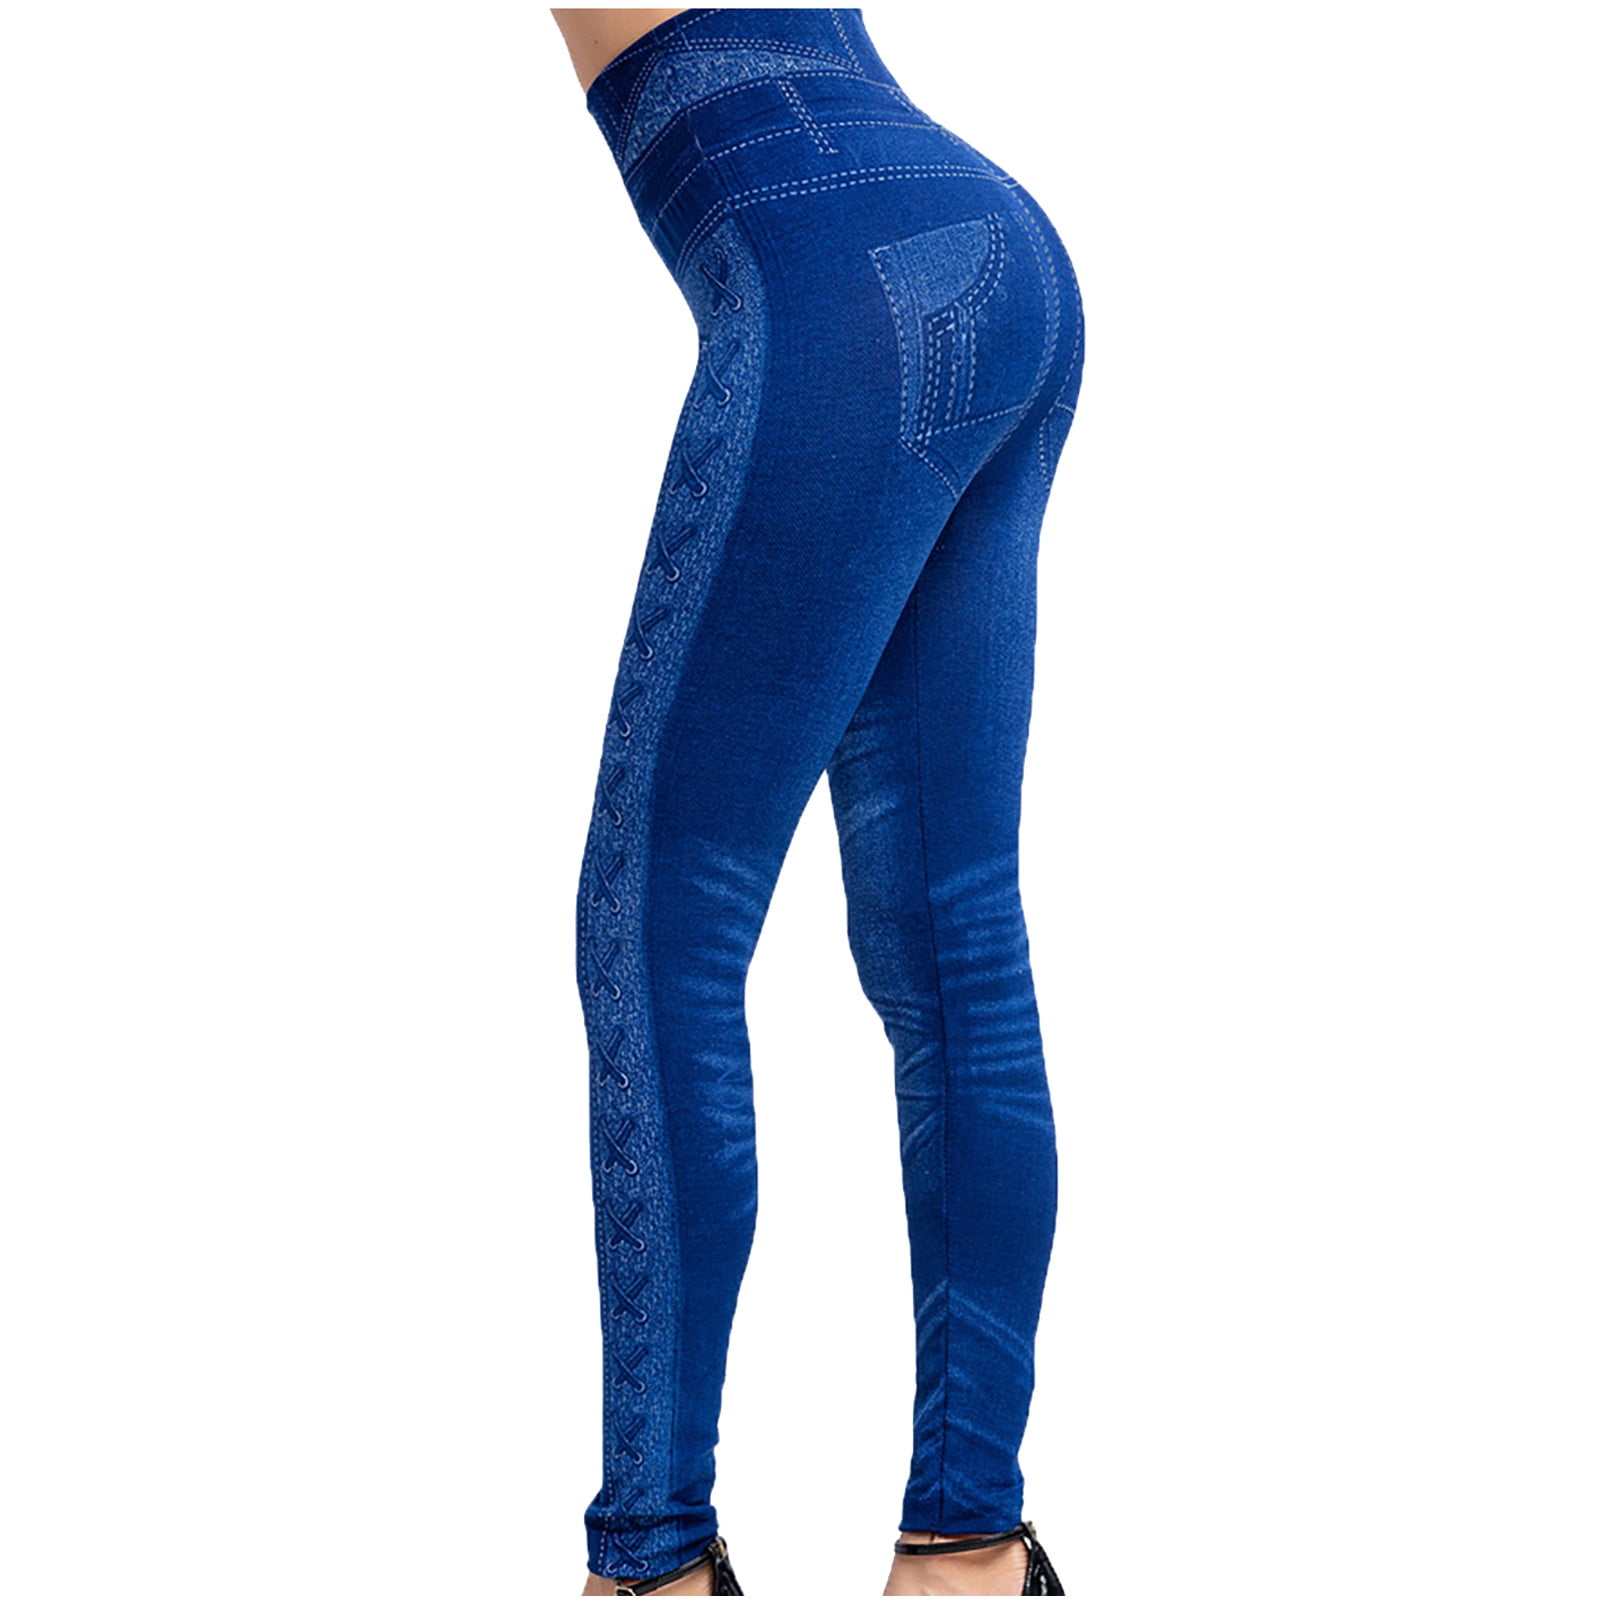 Reduce Price Hfyihgf Women Plus Size Jeans Jeggings Butt Lift